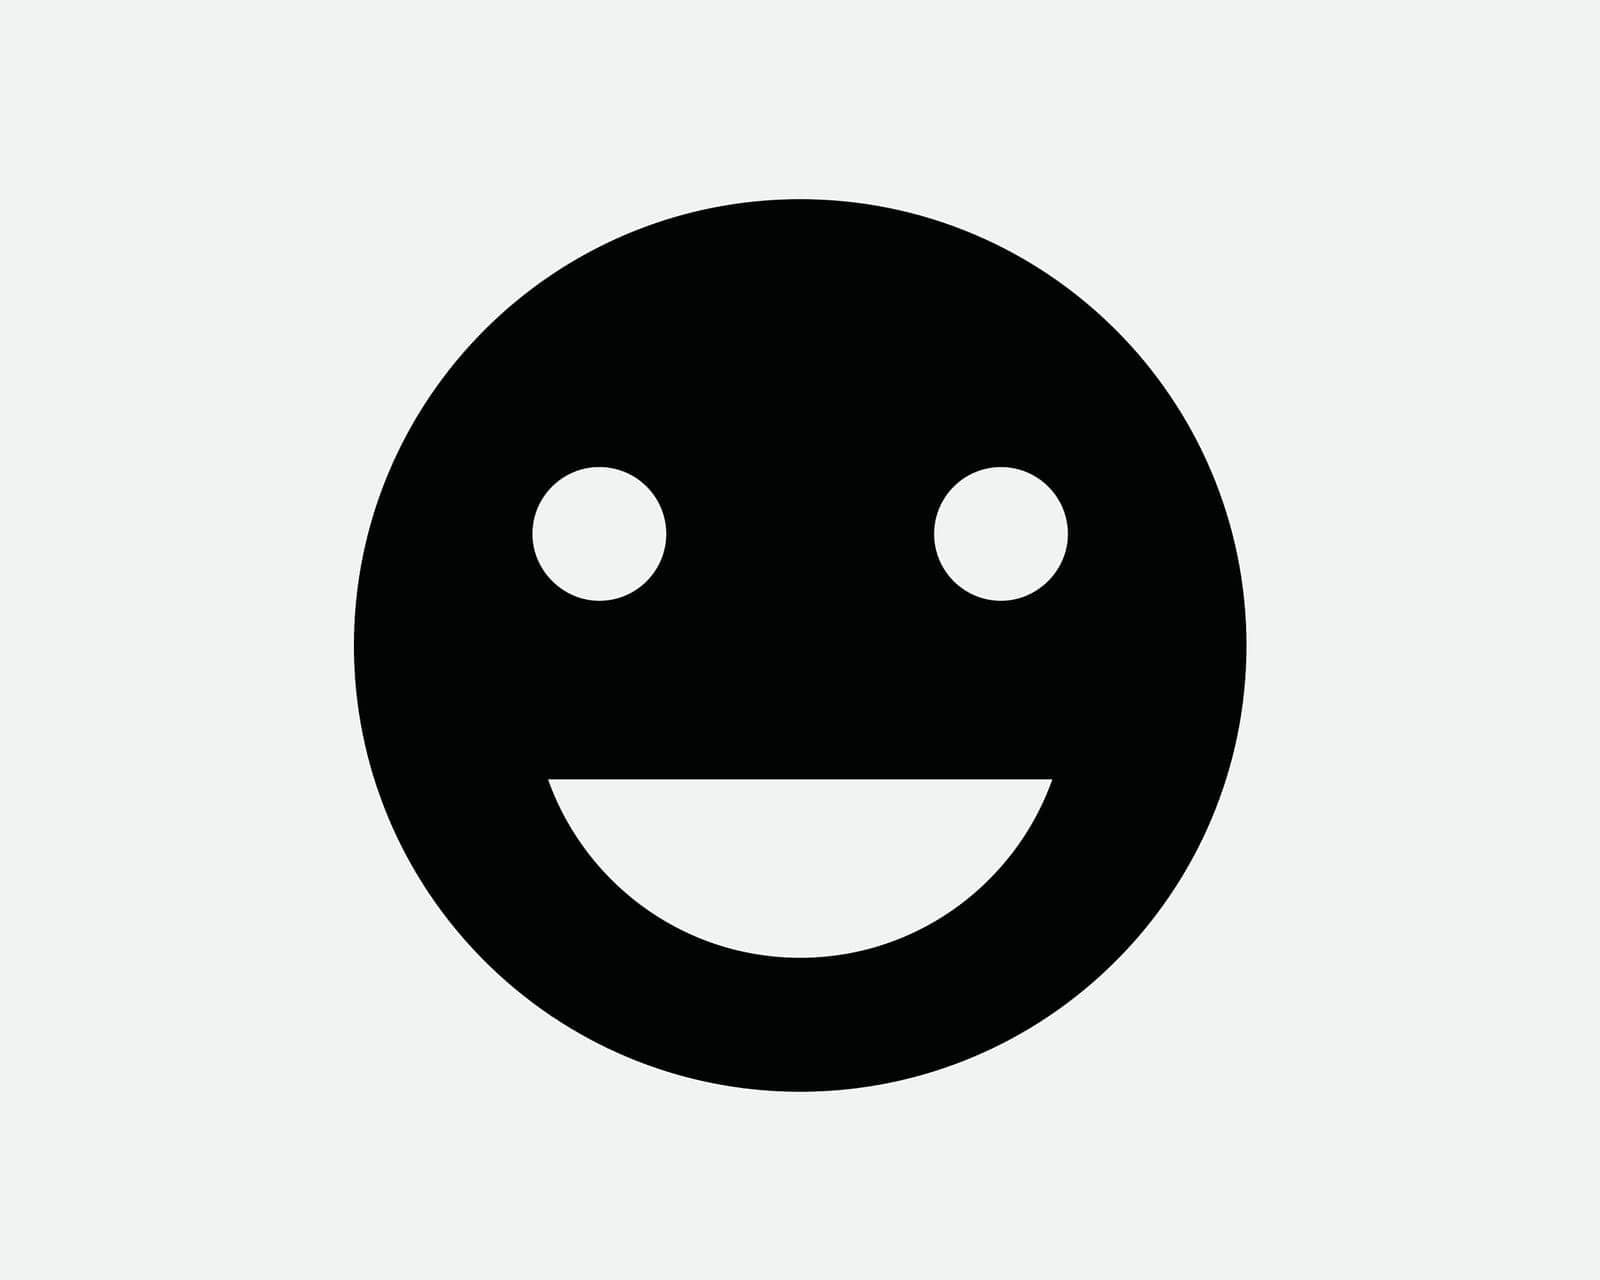 Happy Face Icon. Smile Smiley Facial Expression Emoticon Cheerful Joy Fun Glad Positive Sign Symbol Artwork Graphic Illustration Clipart Vector Cricut